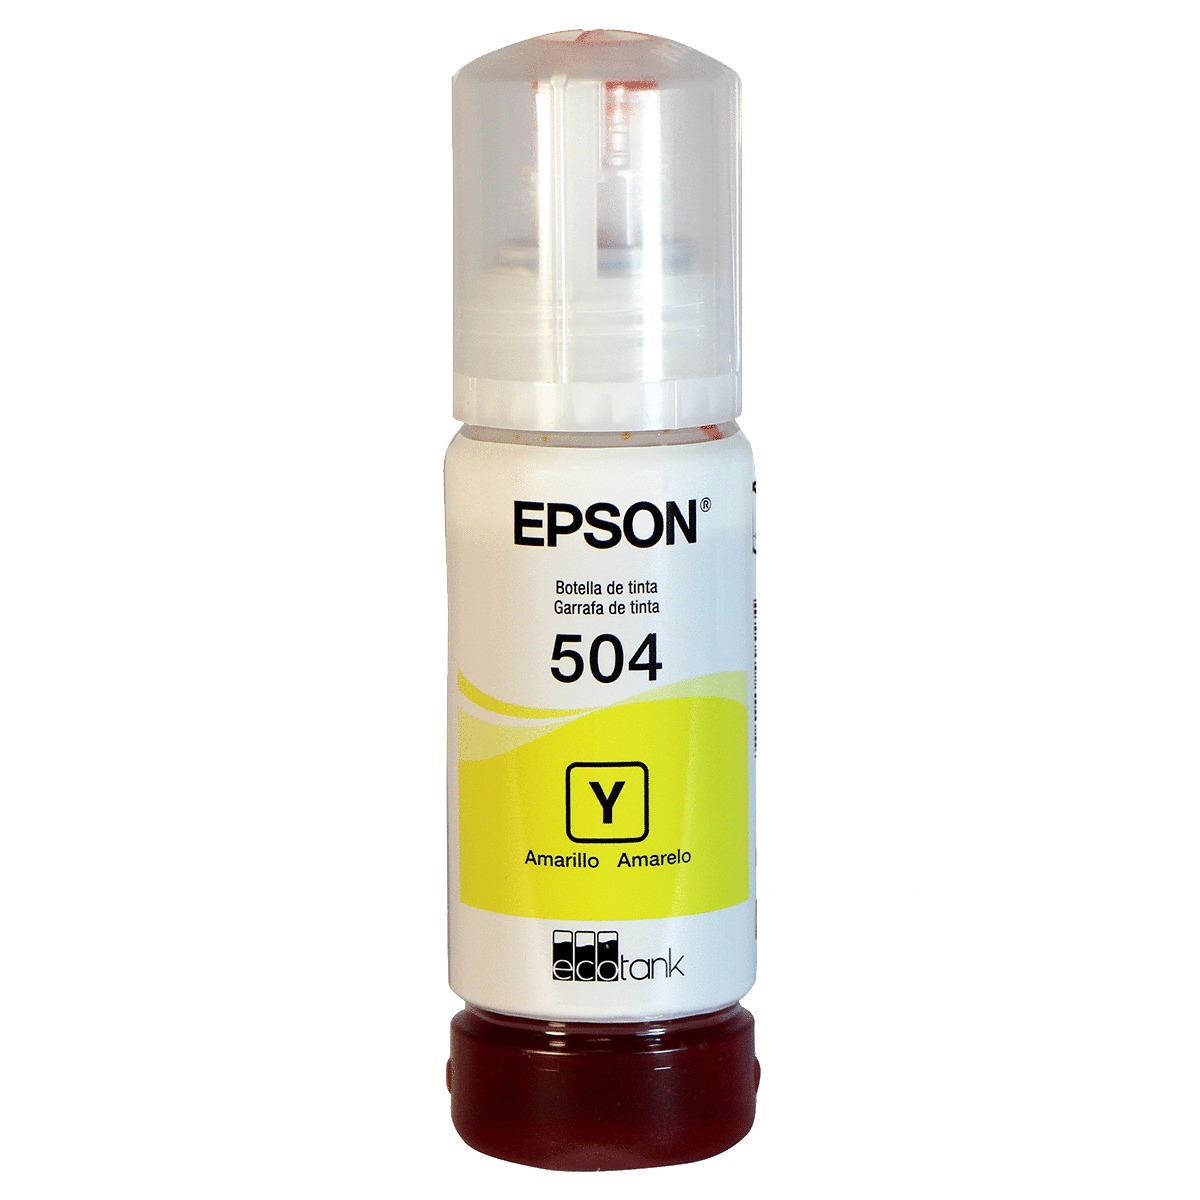 Botella de Tinta Epson T504 / T504420 AL / Amarillo / 7500 páginas / EcoTank